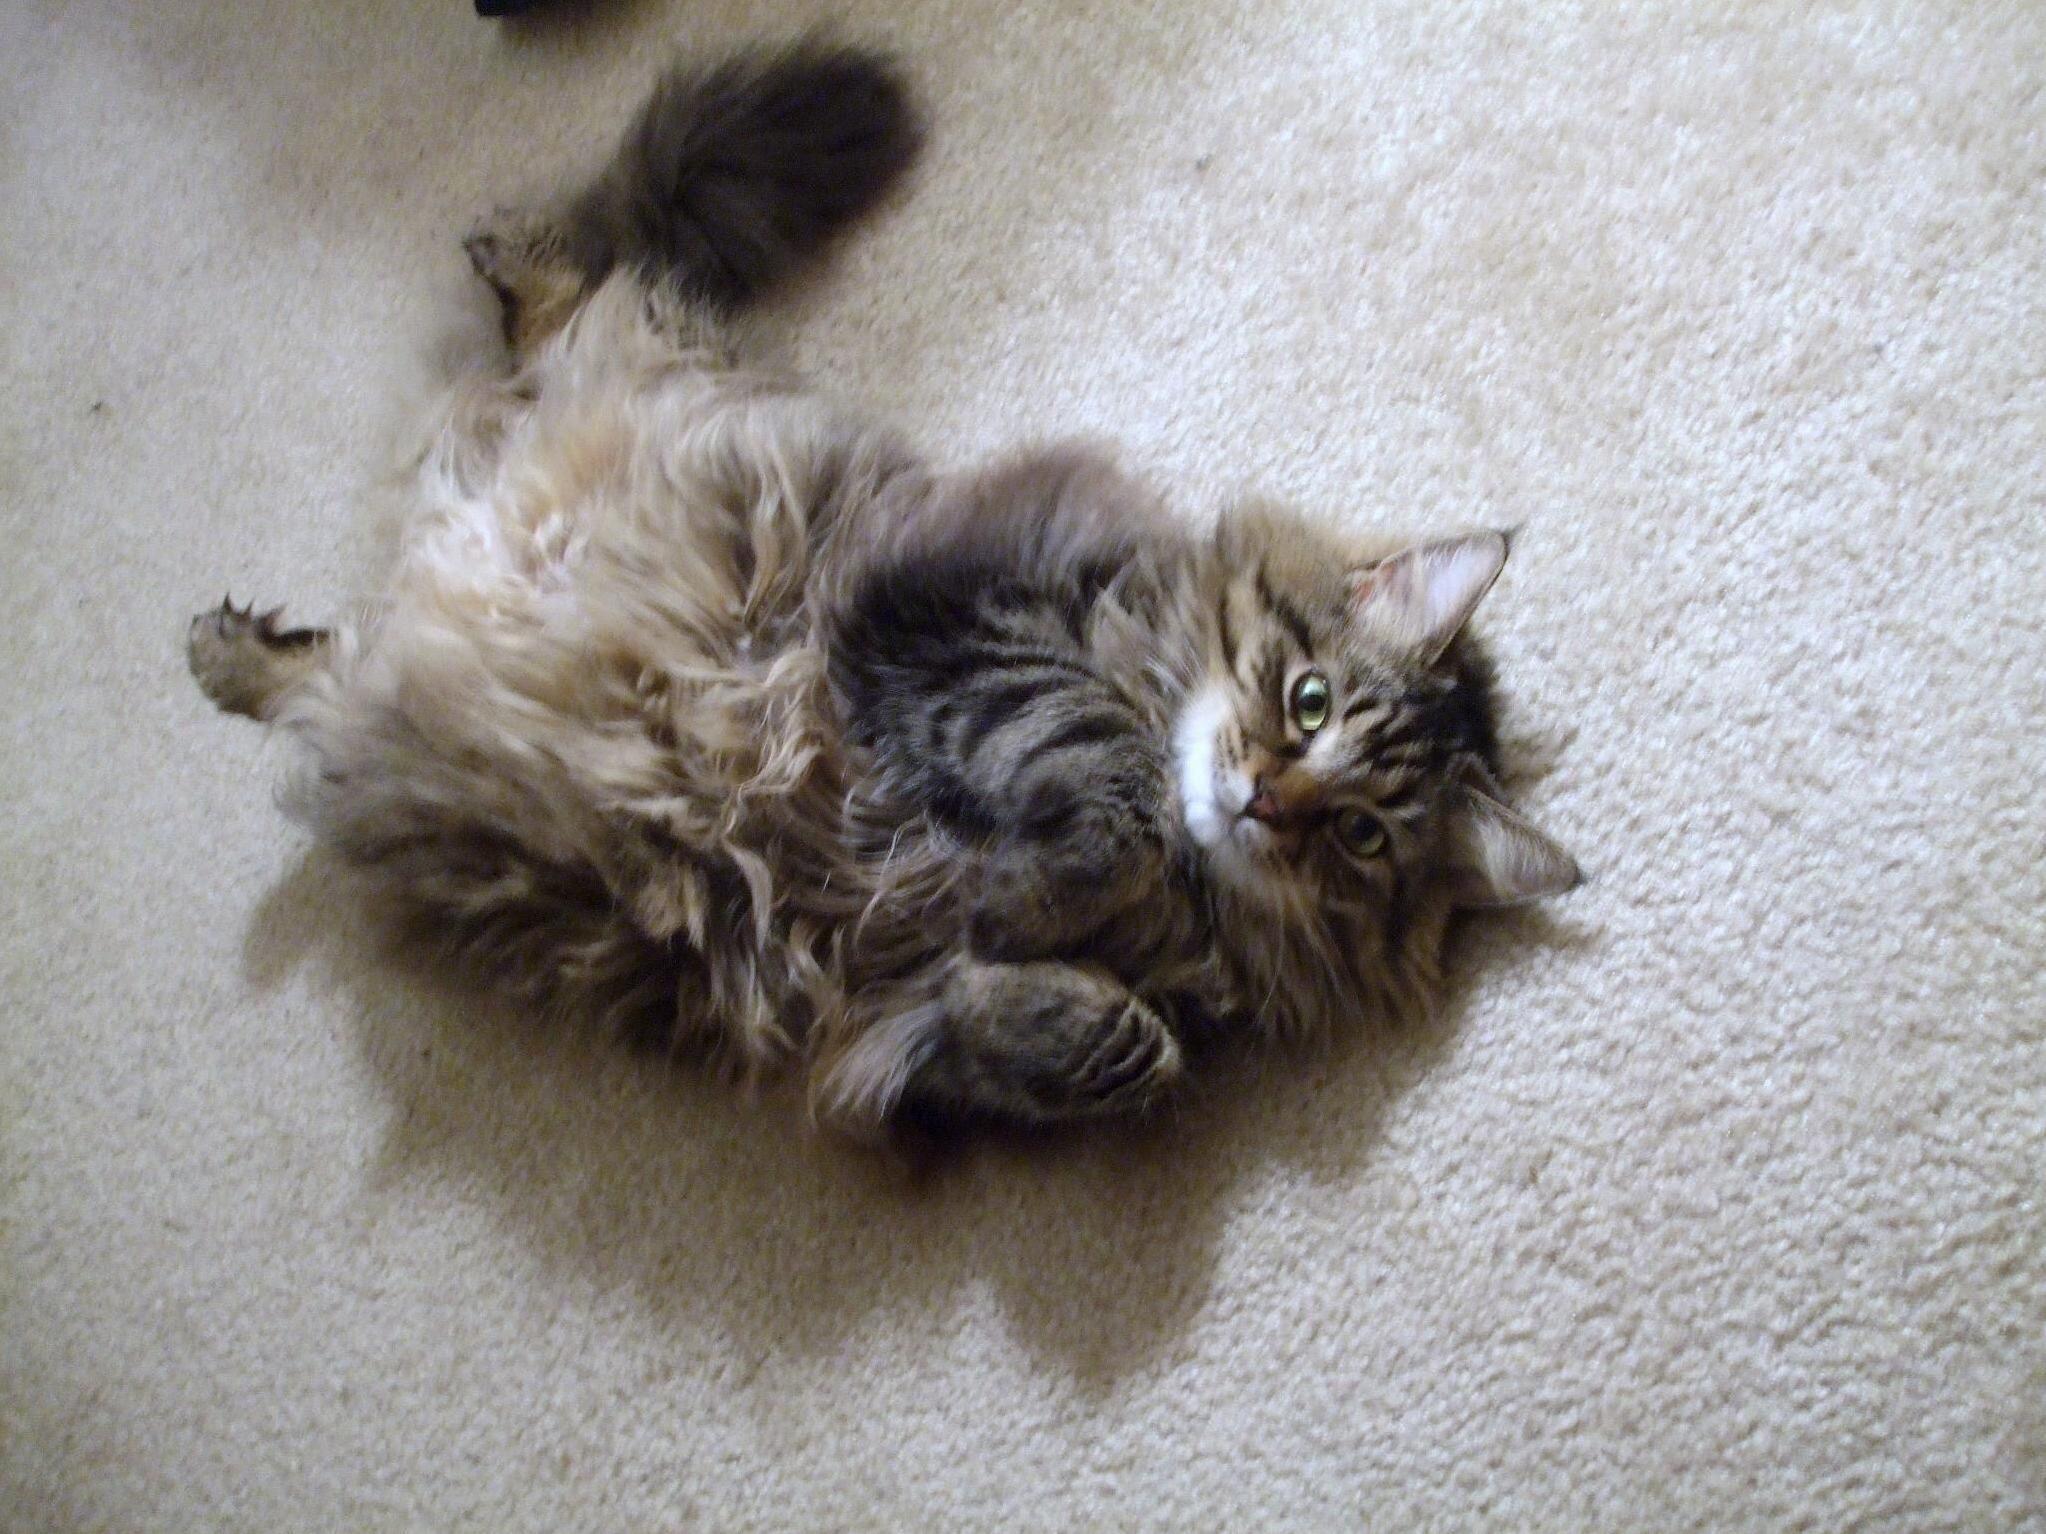 Reddit, meet dixie cat. she is even fluffier than she looks.